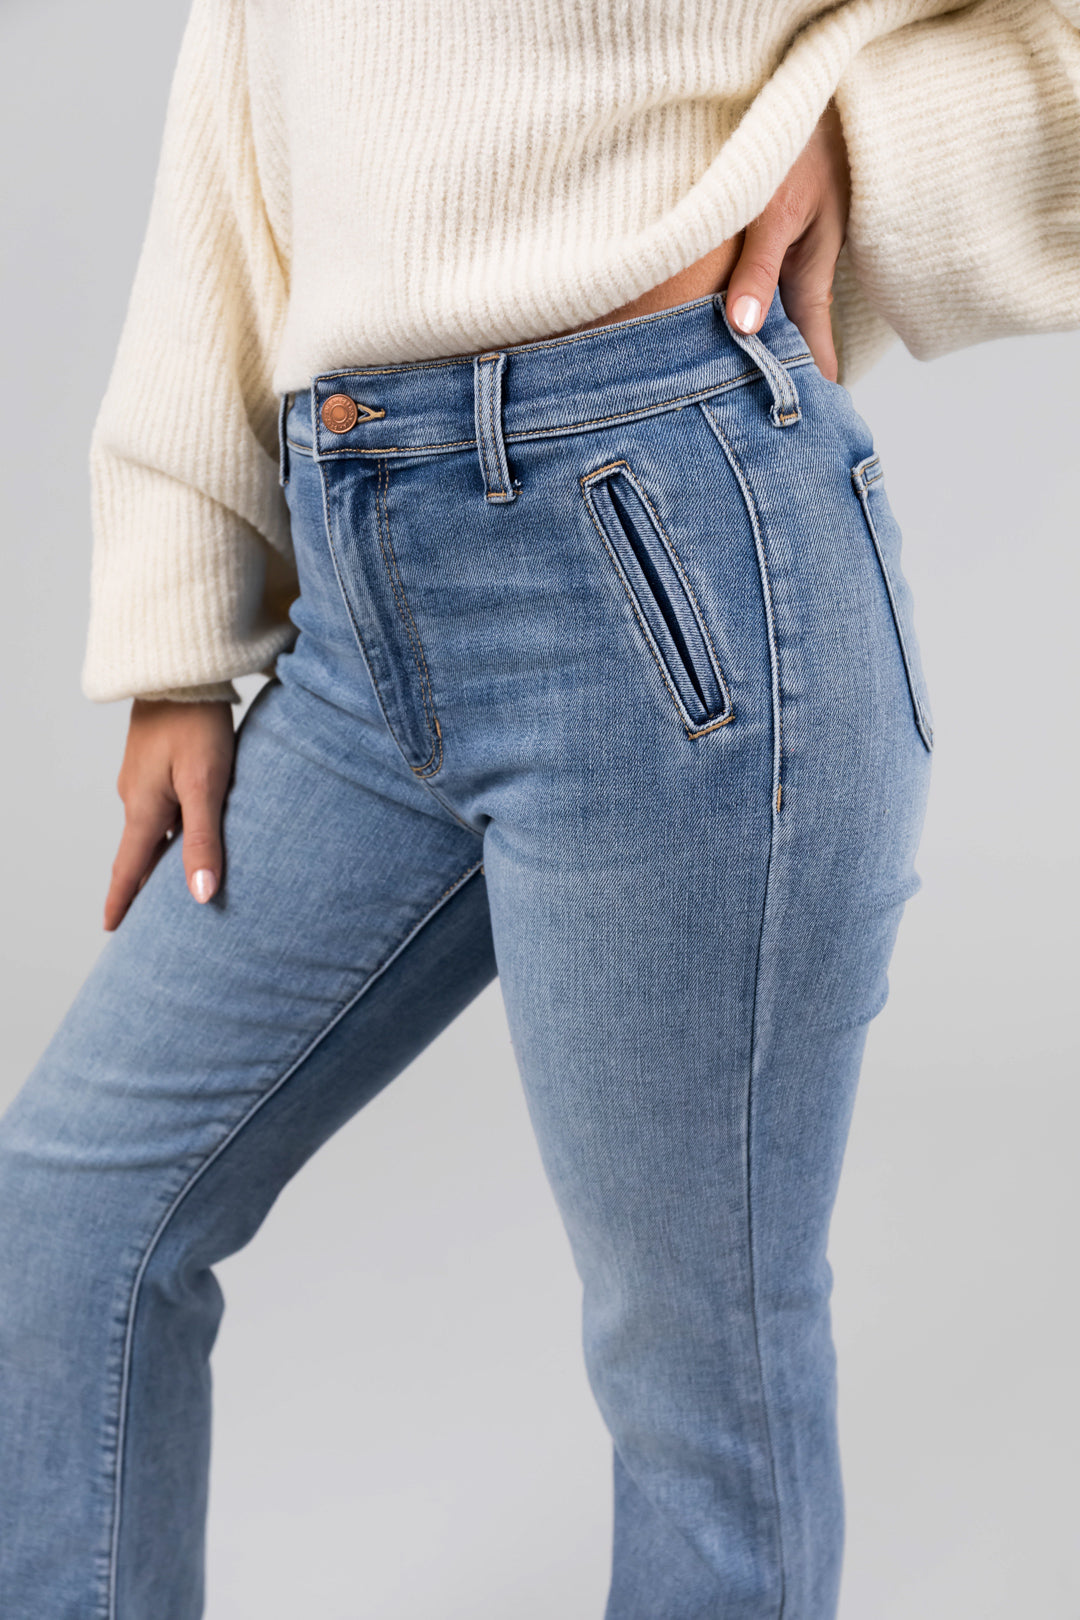 Sneak Peek Medium Light Wash Stretchy Slim Bootcut Jeans